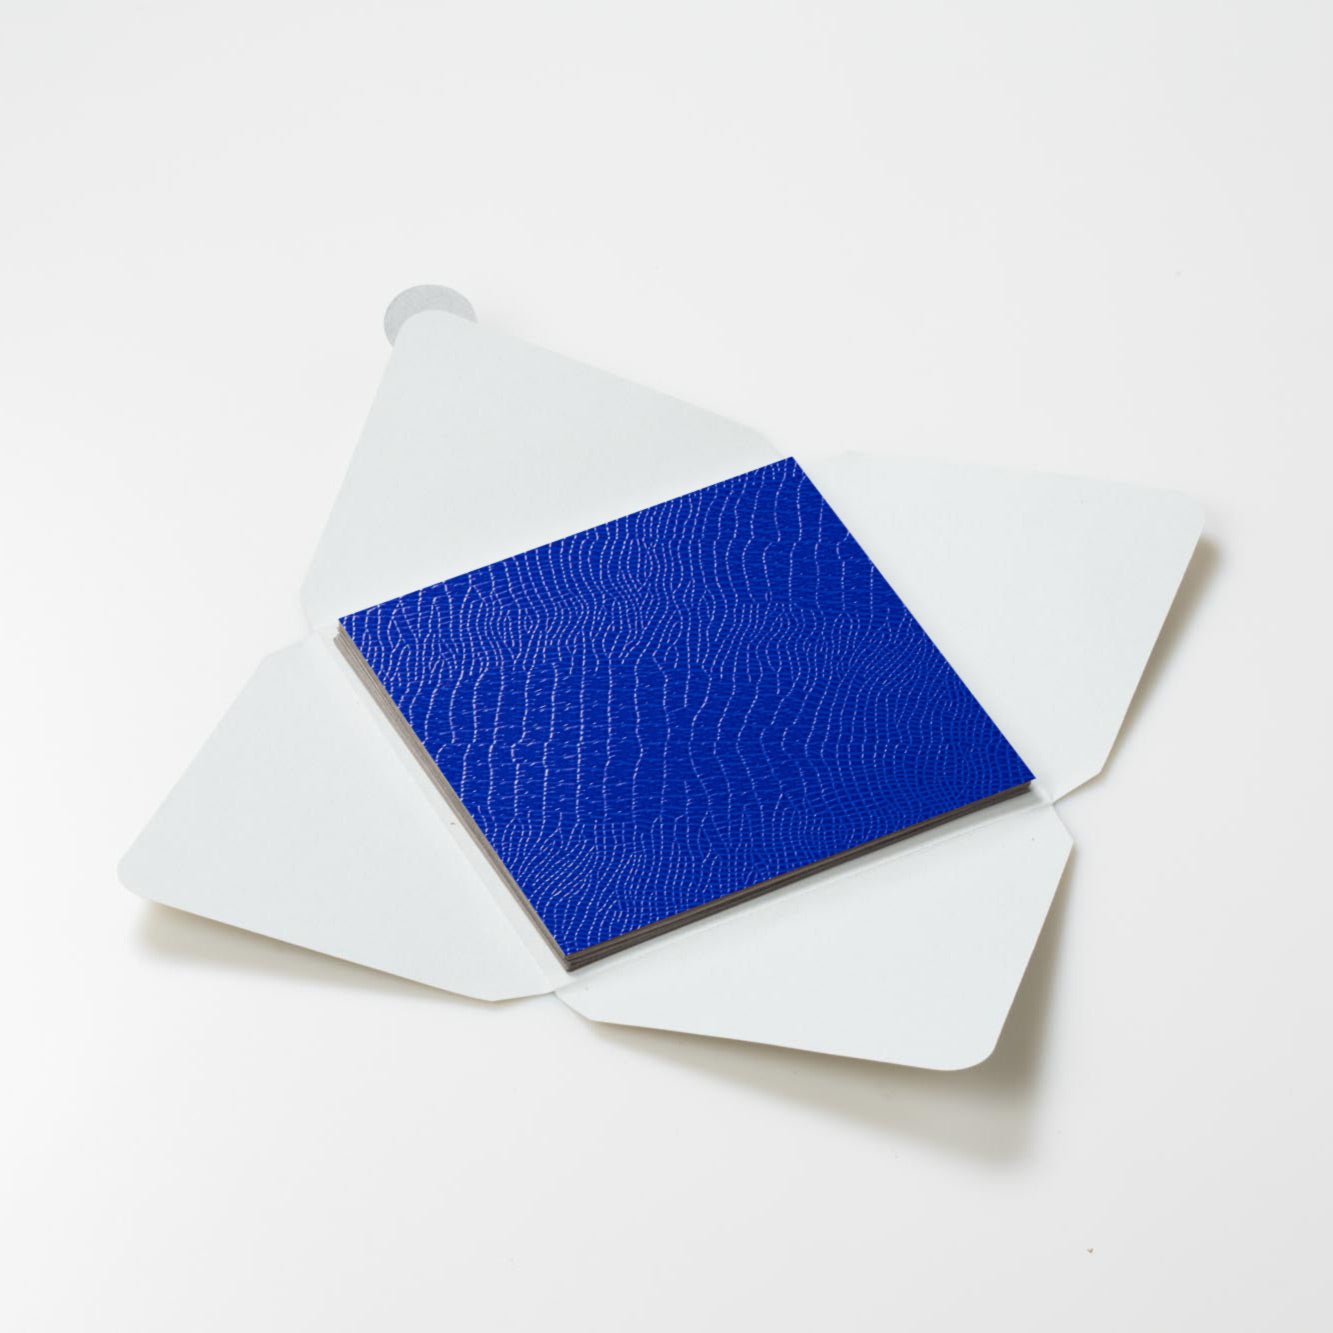 Kit di fogli "Lucertola Blu" formato origami 15 cm x 15 cm - Manamant Paper Tales -FG0461575M2D